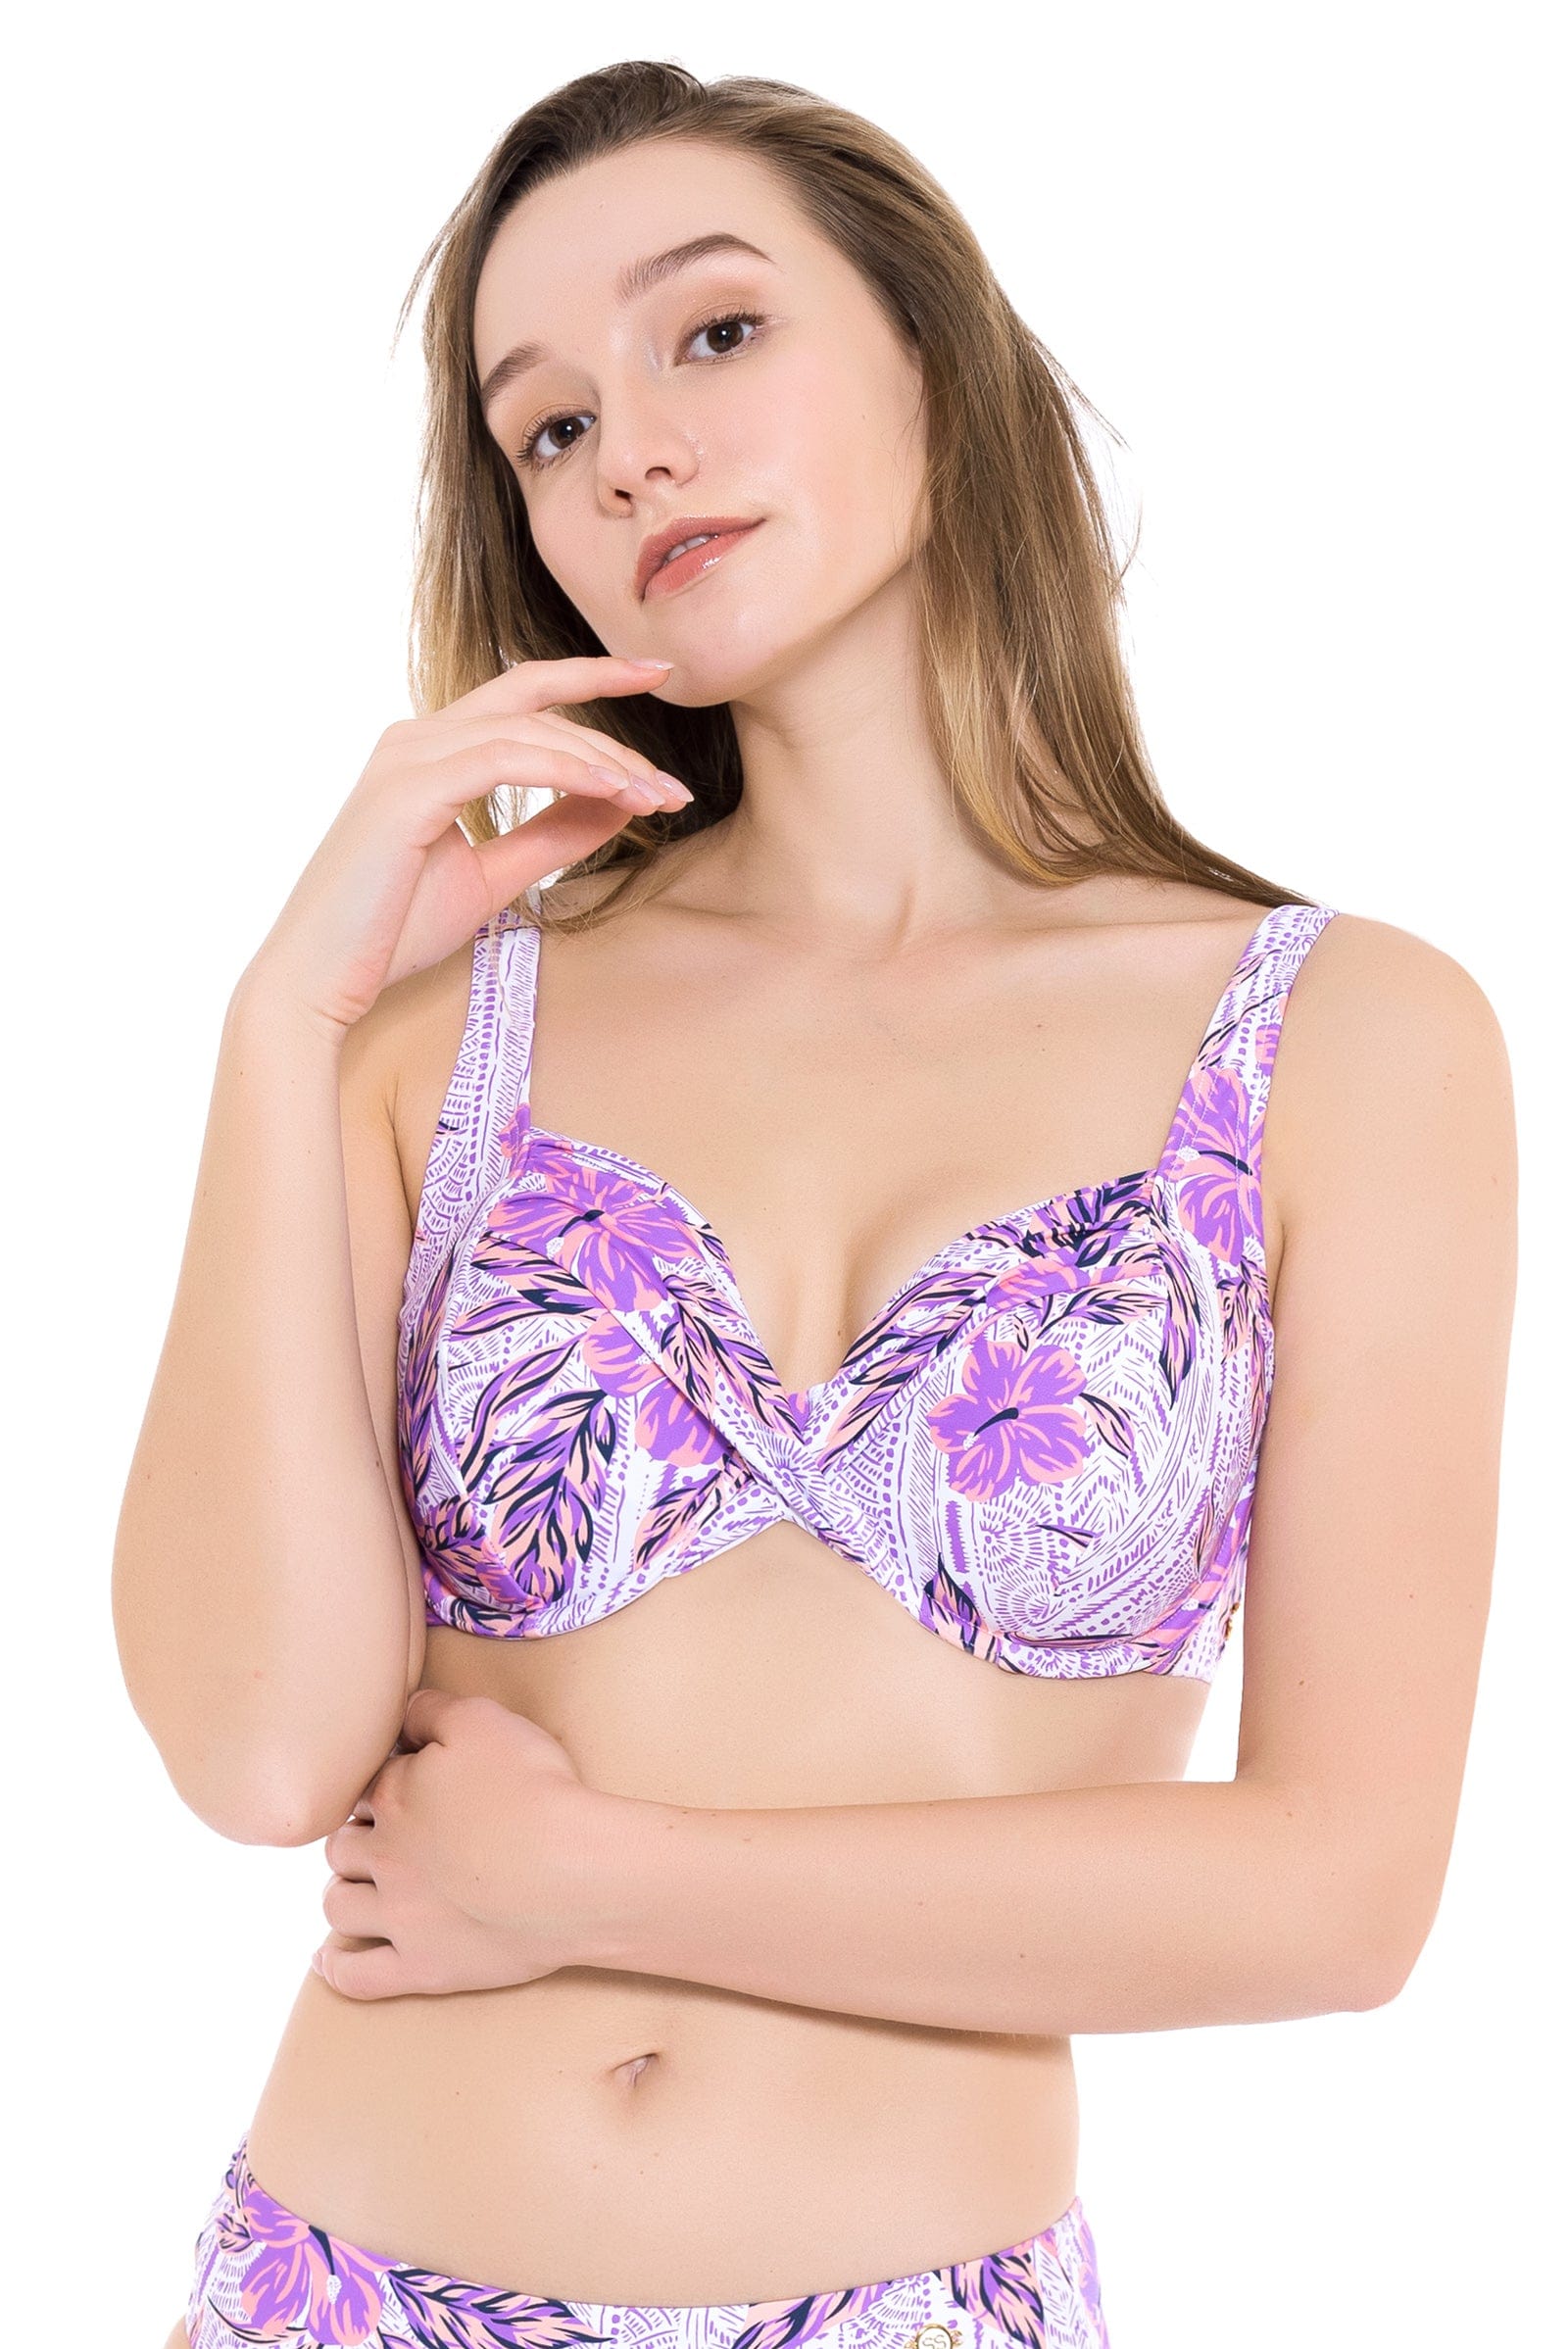 Plus Cup Bikini Tops South Pacific Hibiscus Purple Plus Cup Underwire Bikini Top - Sunseeker